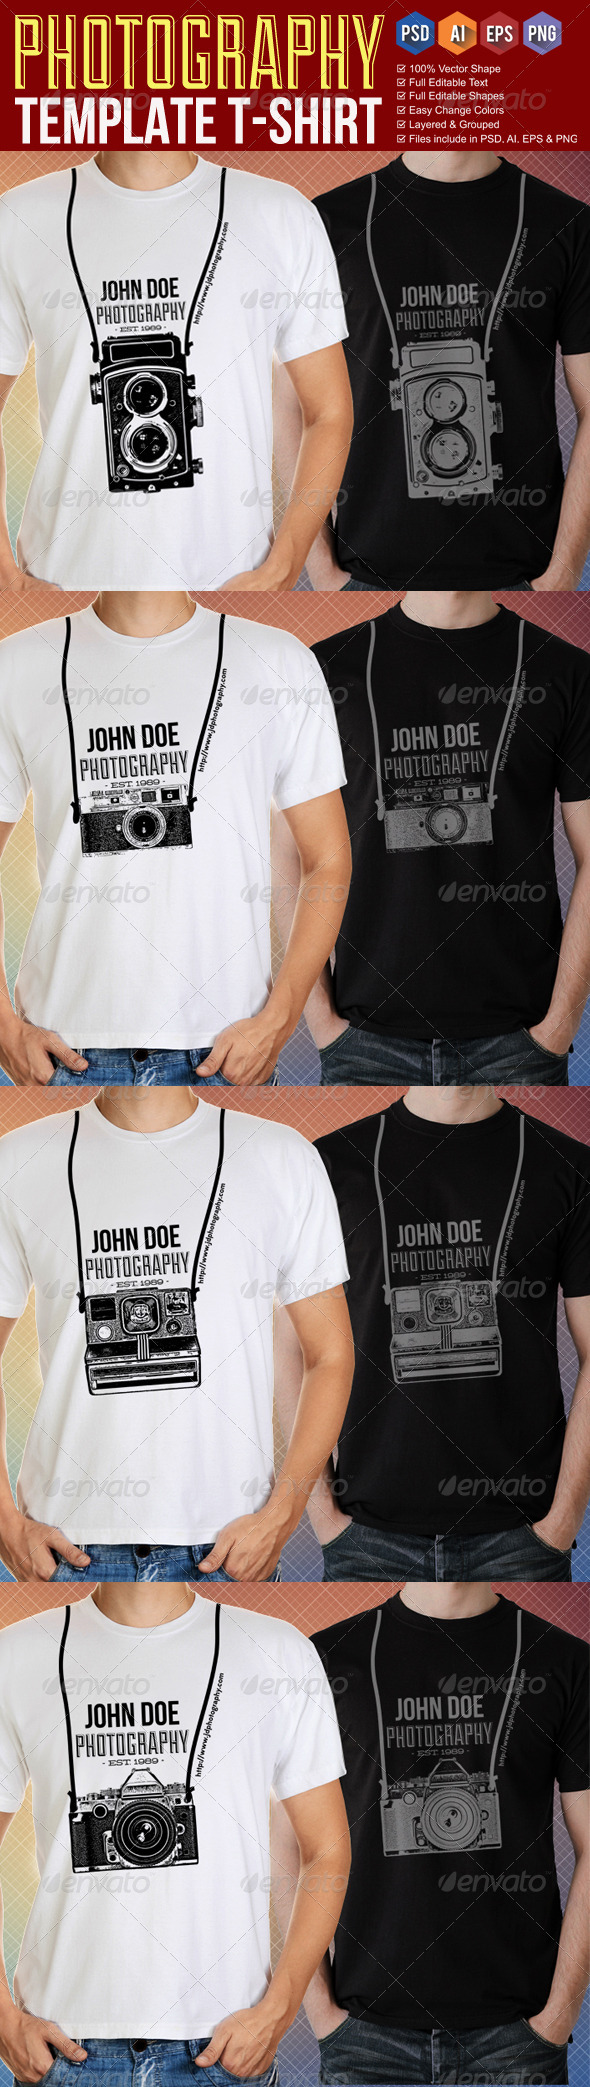 Photography T-Shirt Templates - Designs T-Shirts